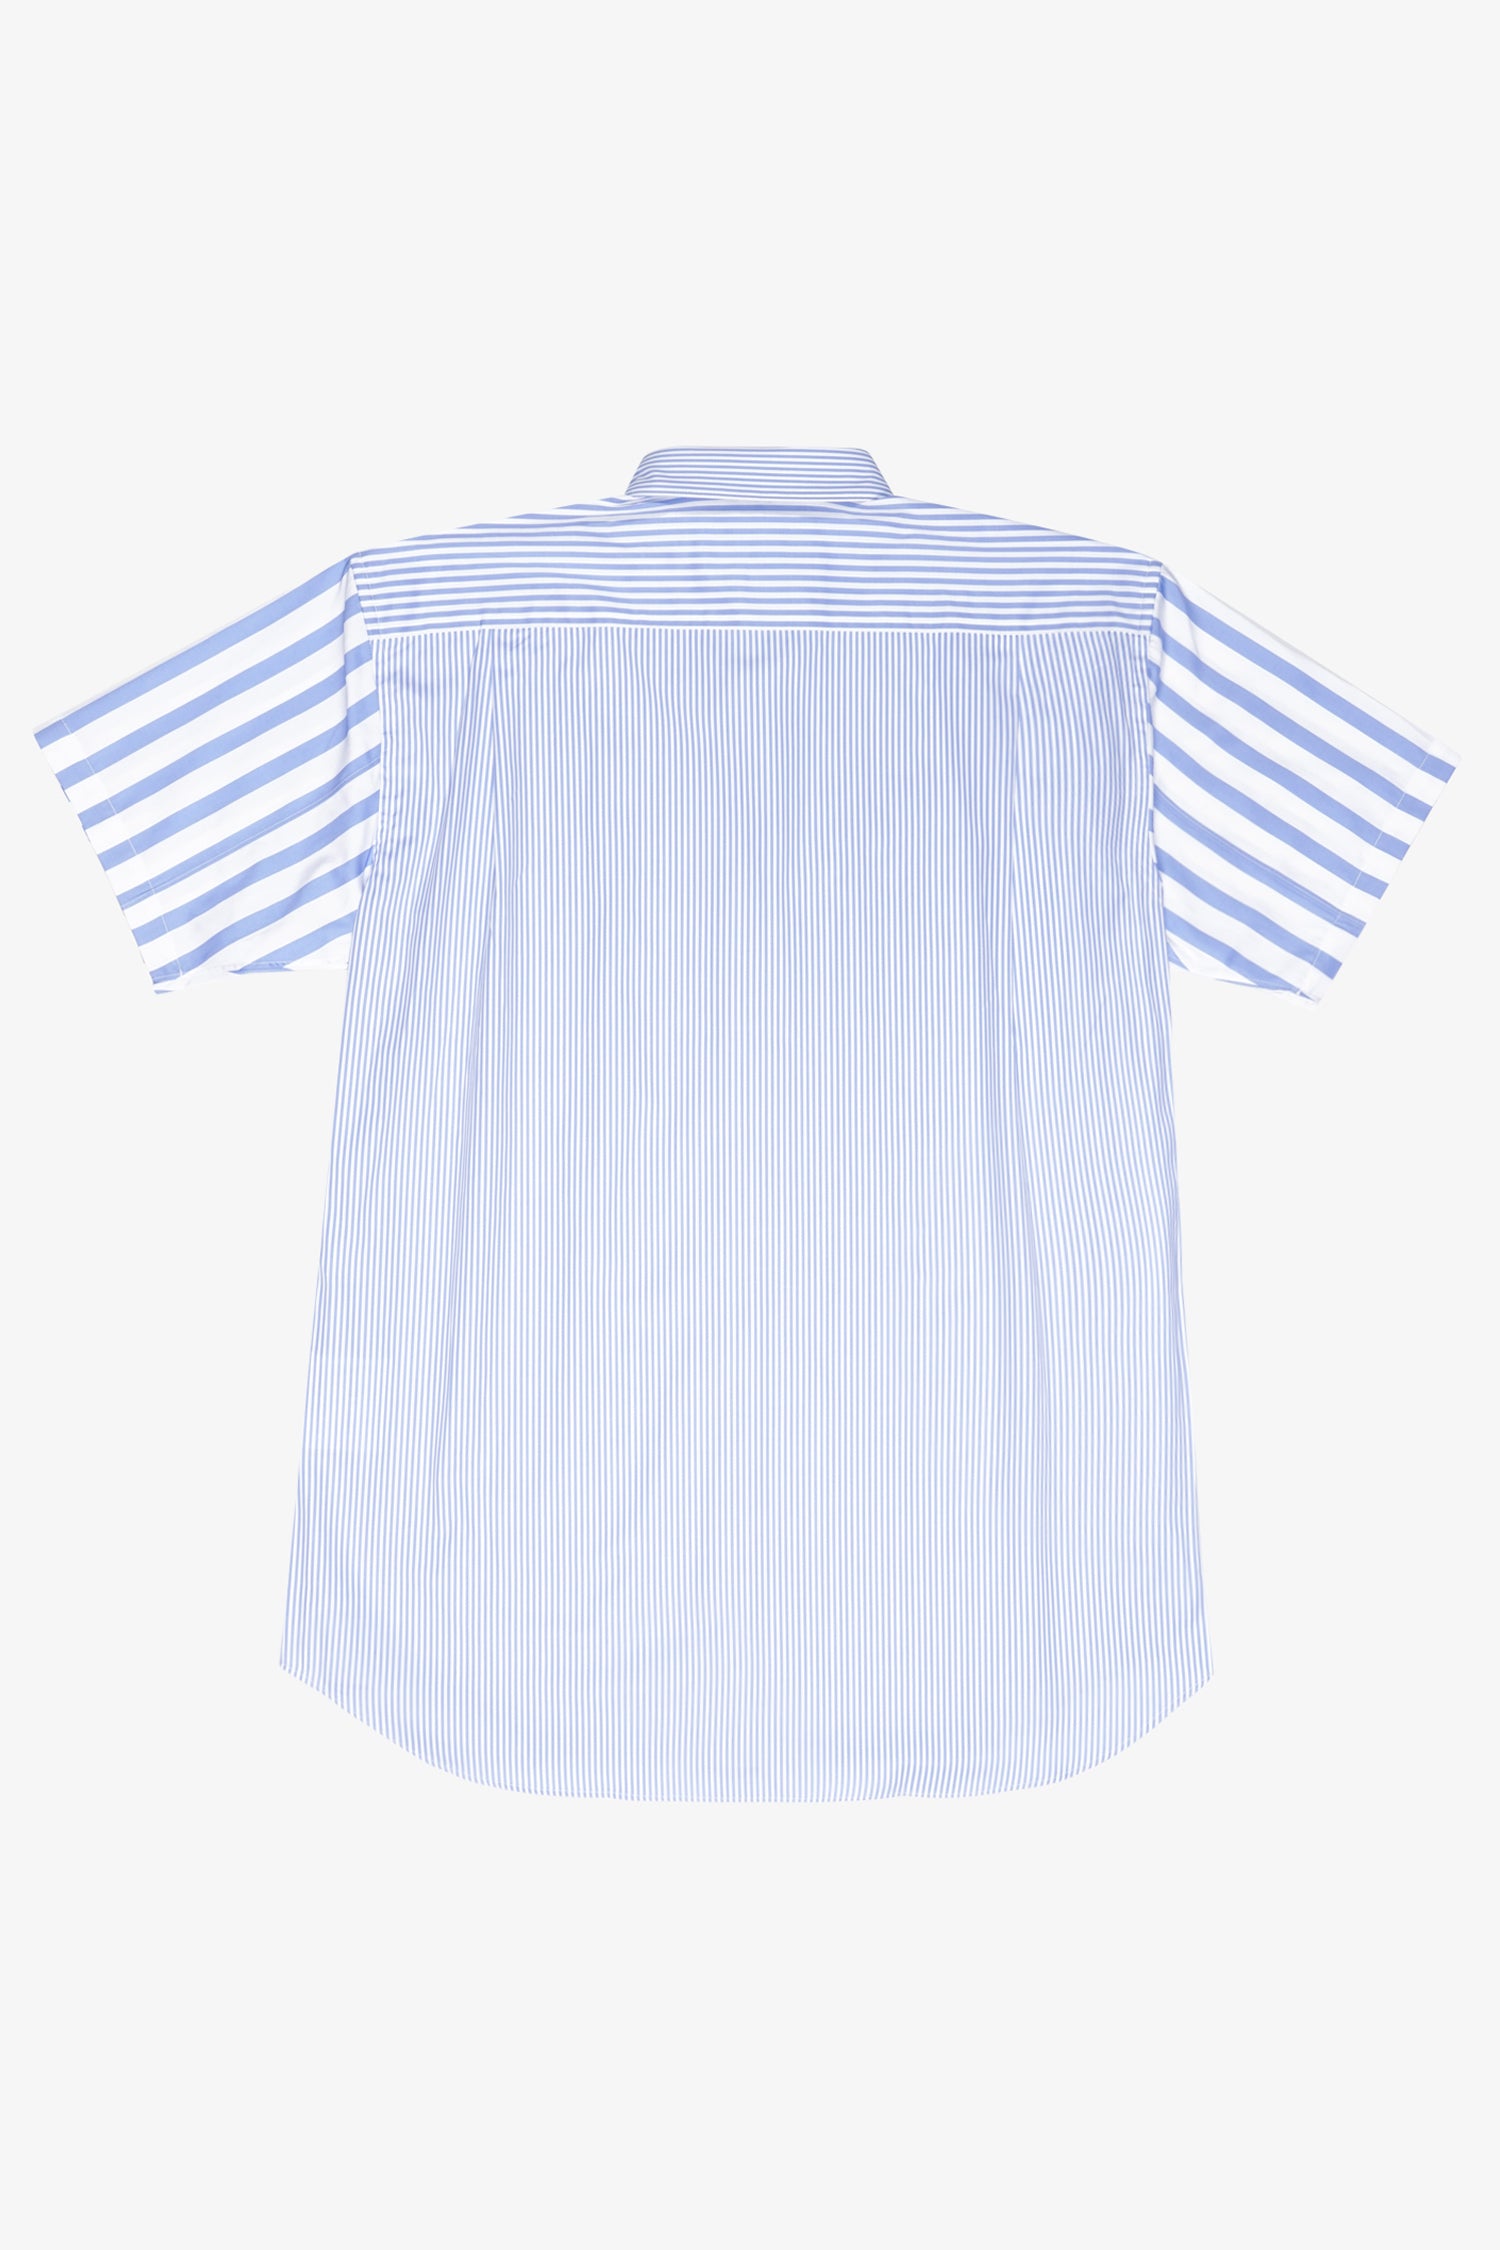 Selectshop FRAME - COMME DES GARÇONS SHIRT Short sleeves Colorblocking Striped Shirt Shirt Dubai